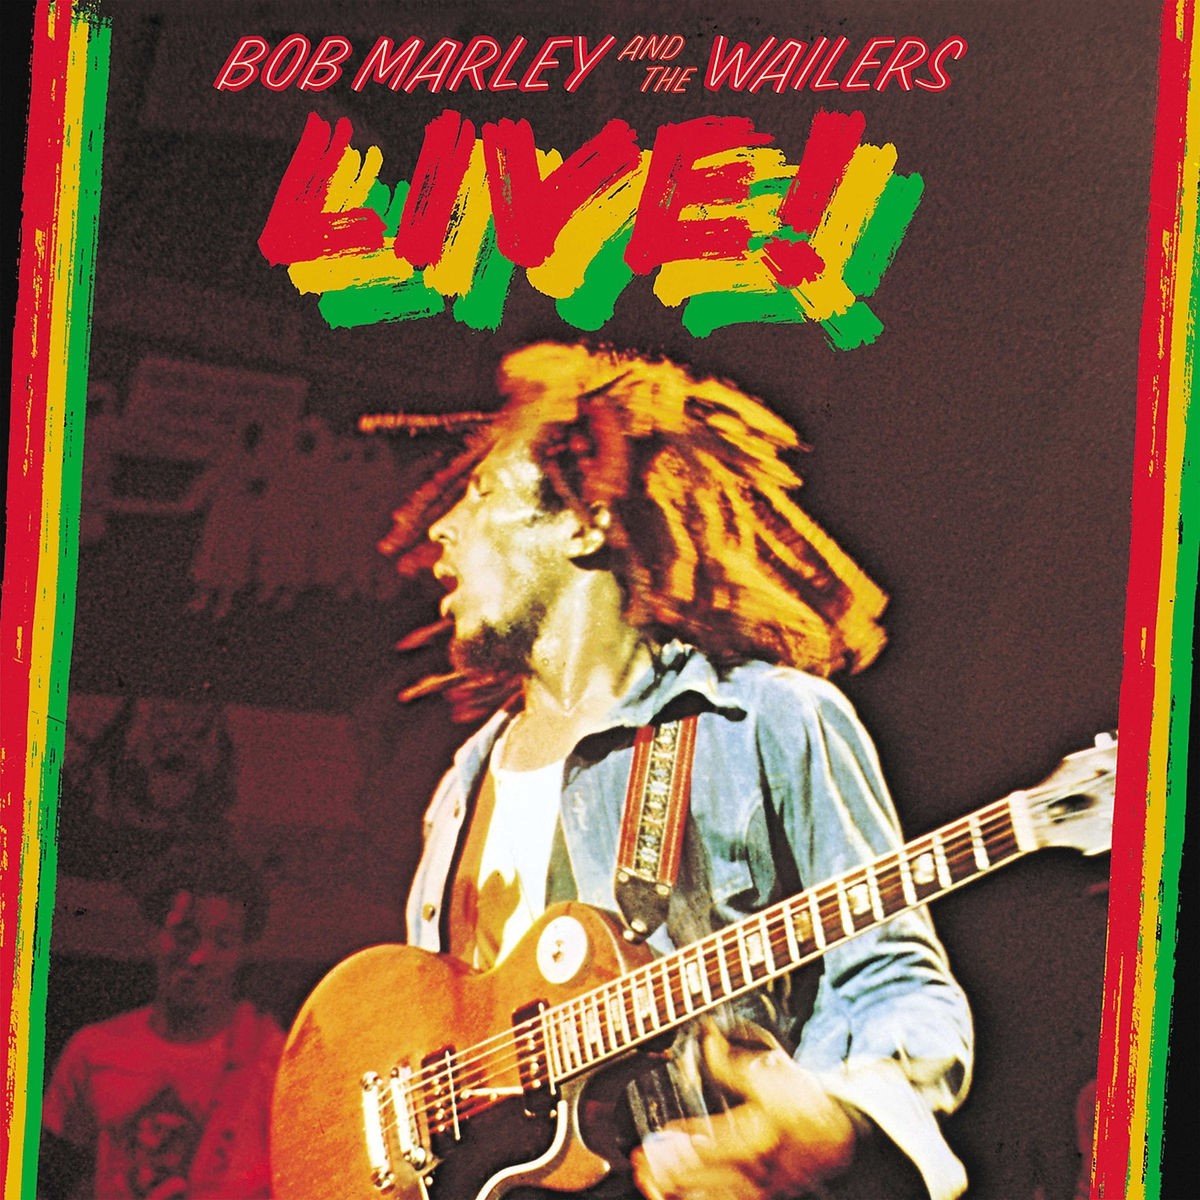 Bob Marley & The Wailers - Live! (2 CD) (Deluxe Edition) - Bob Marley